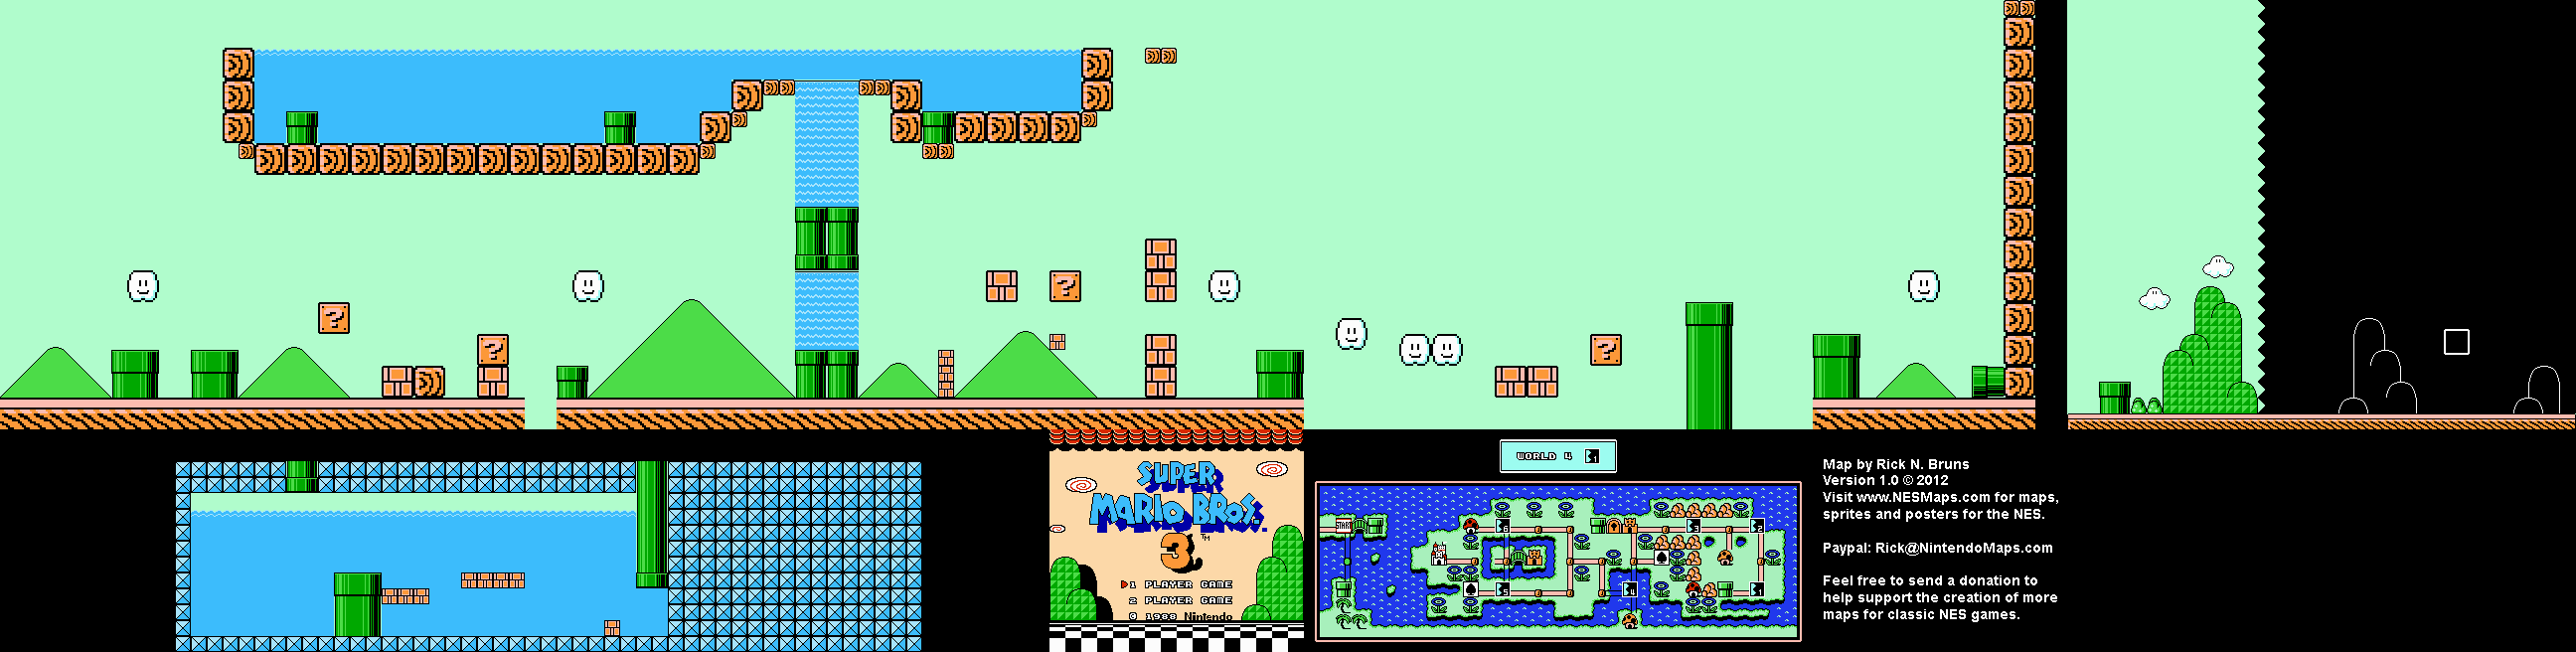 Super Mario Brothers 3 - World 4-1 Nintendo NES Map BG